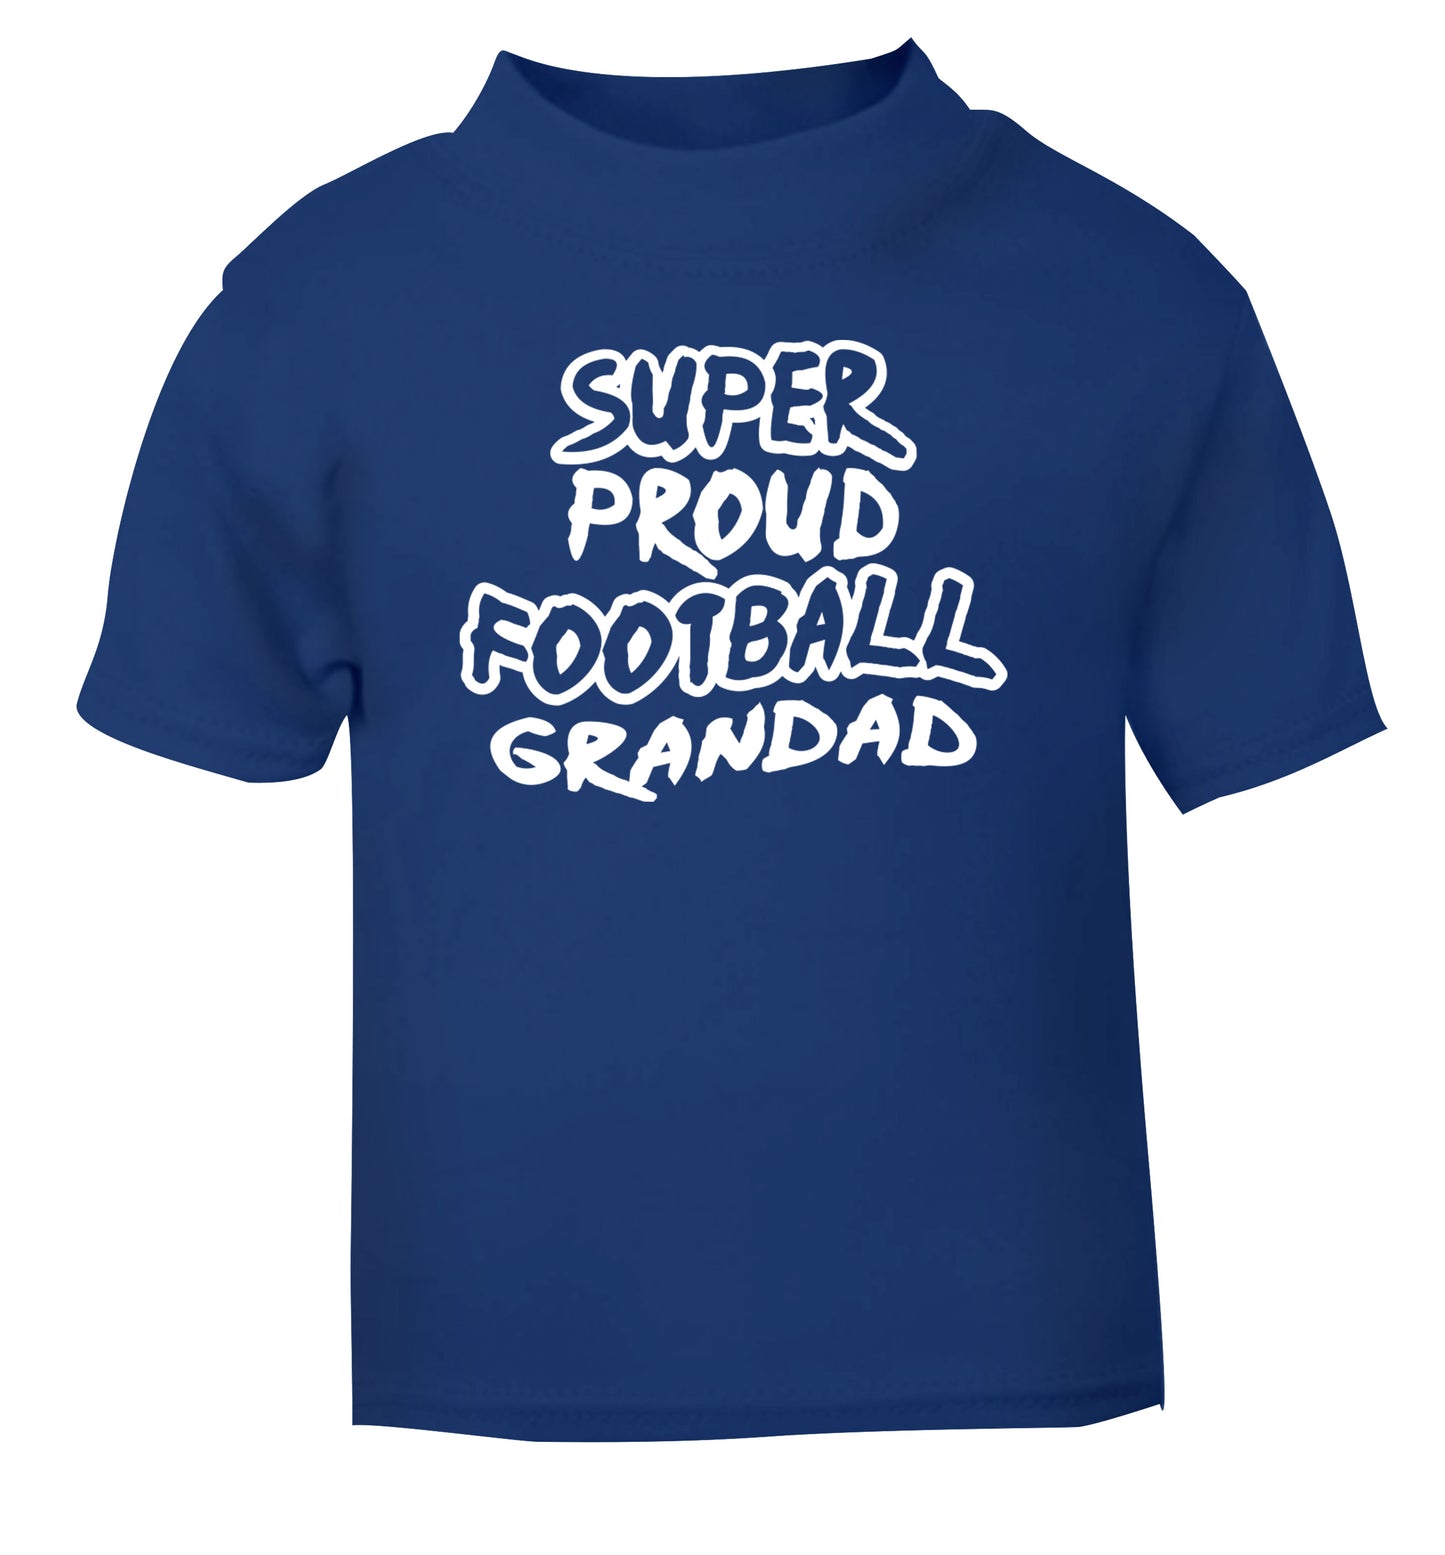 Super proud football grandad blue Baby Toddler Tshirt 2 Years